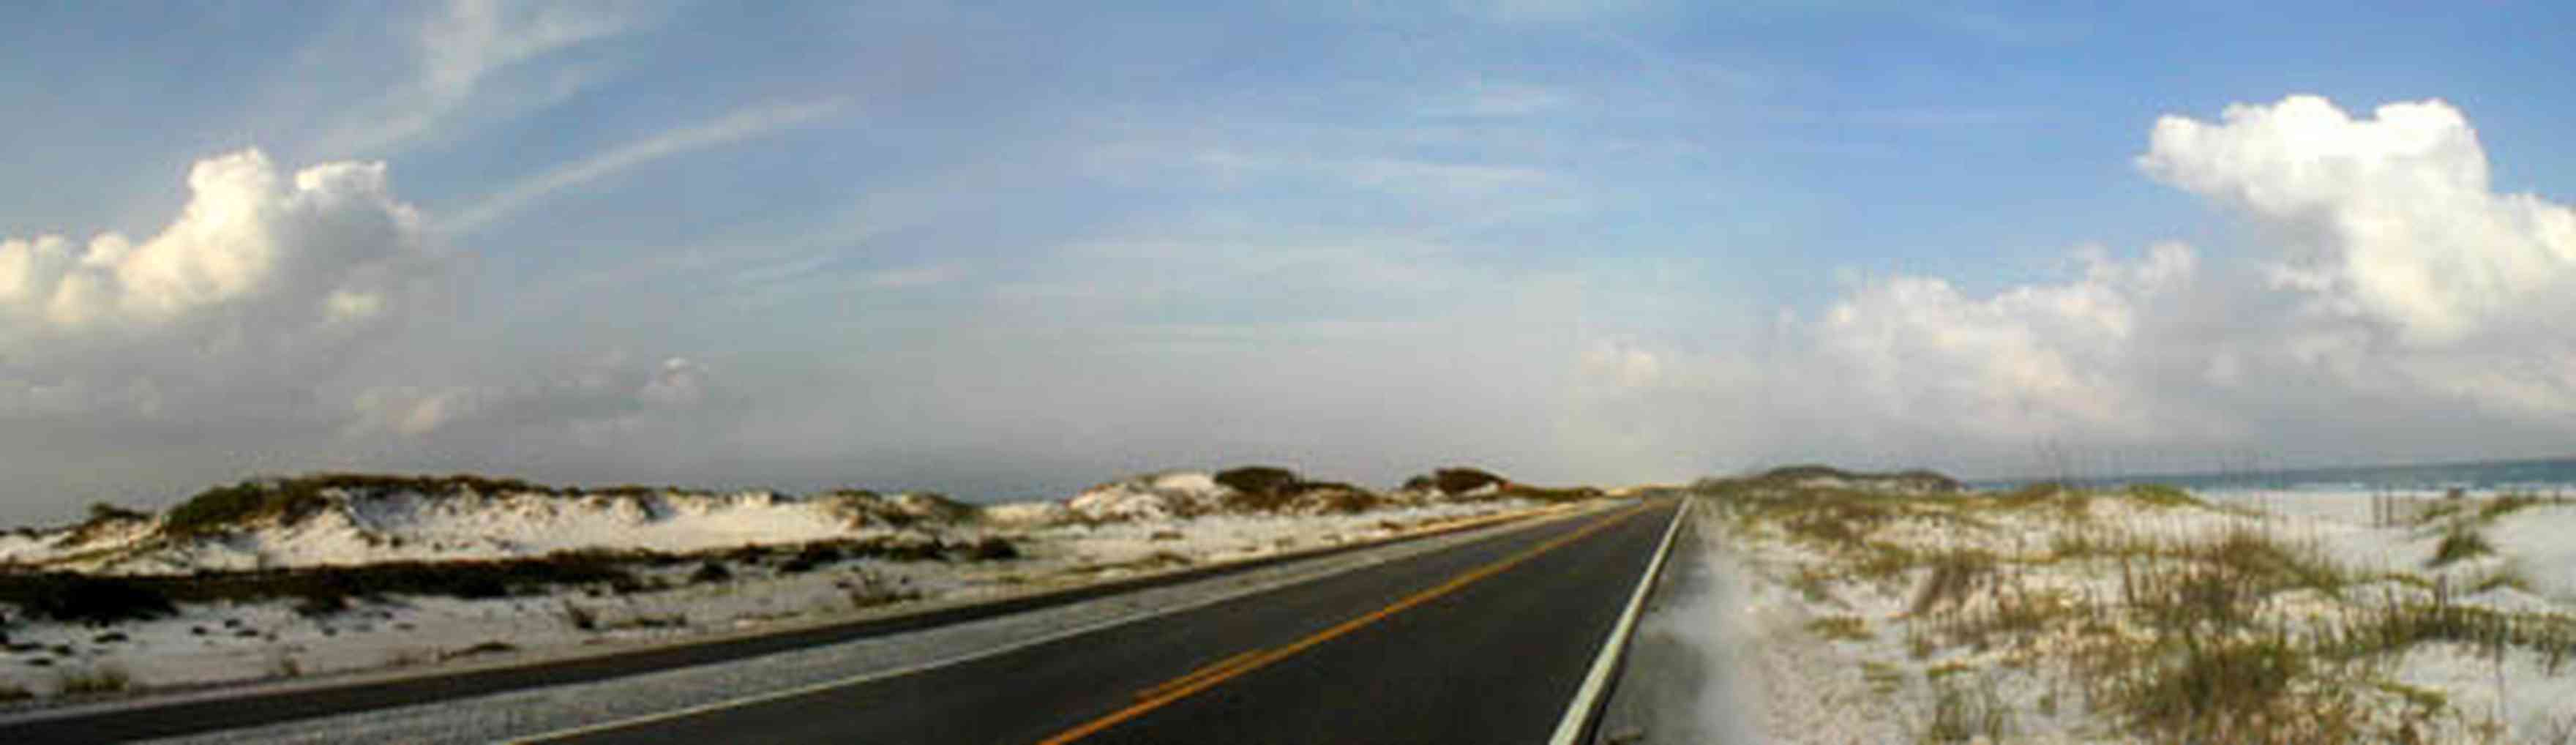 Pensacola-Beach:-Road_01.jpg:  santa rosa island, escambia county, pensacola beach, white sand, dunes, cumulus clouds, surf, emerald coast